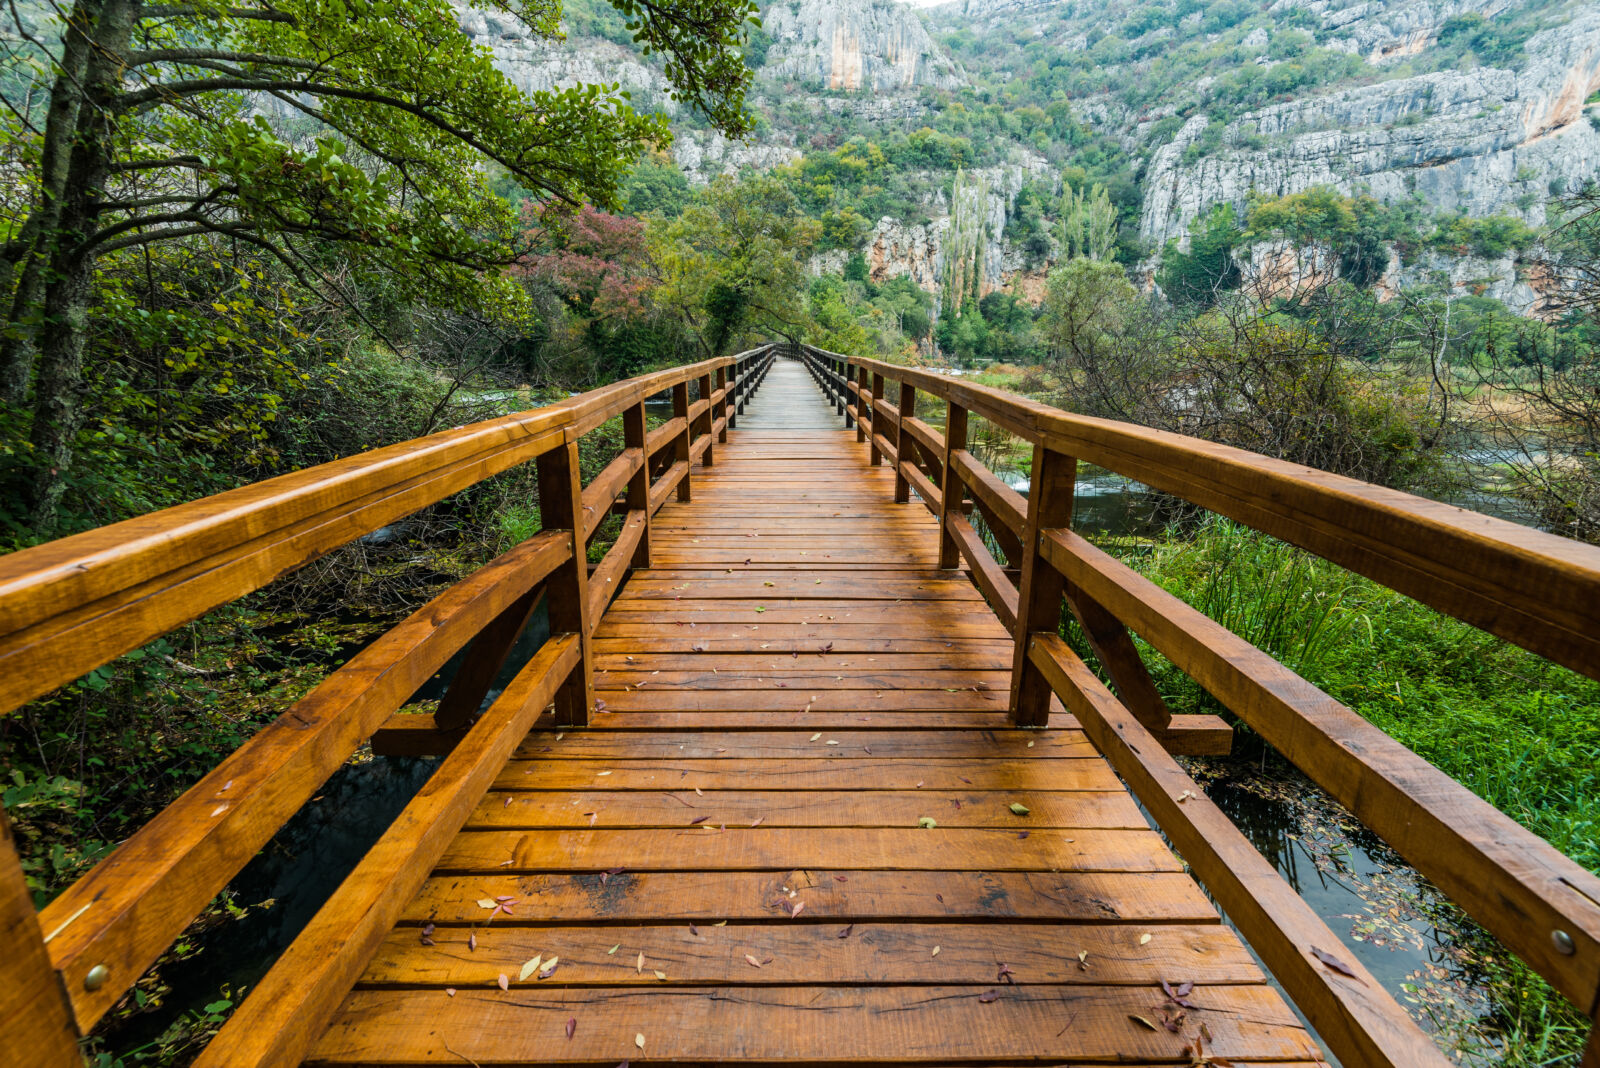 Wooden bridge in Krka National Park,Croatia.